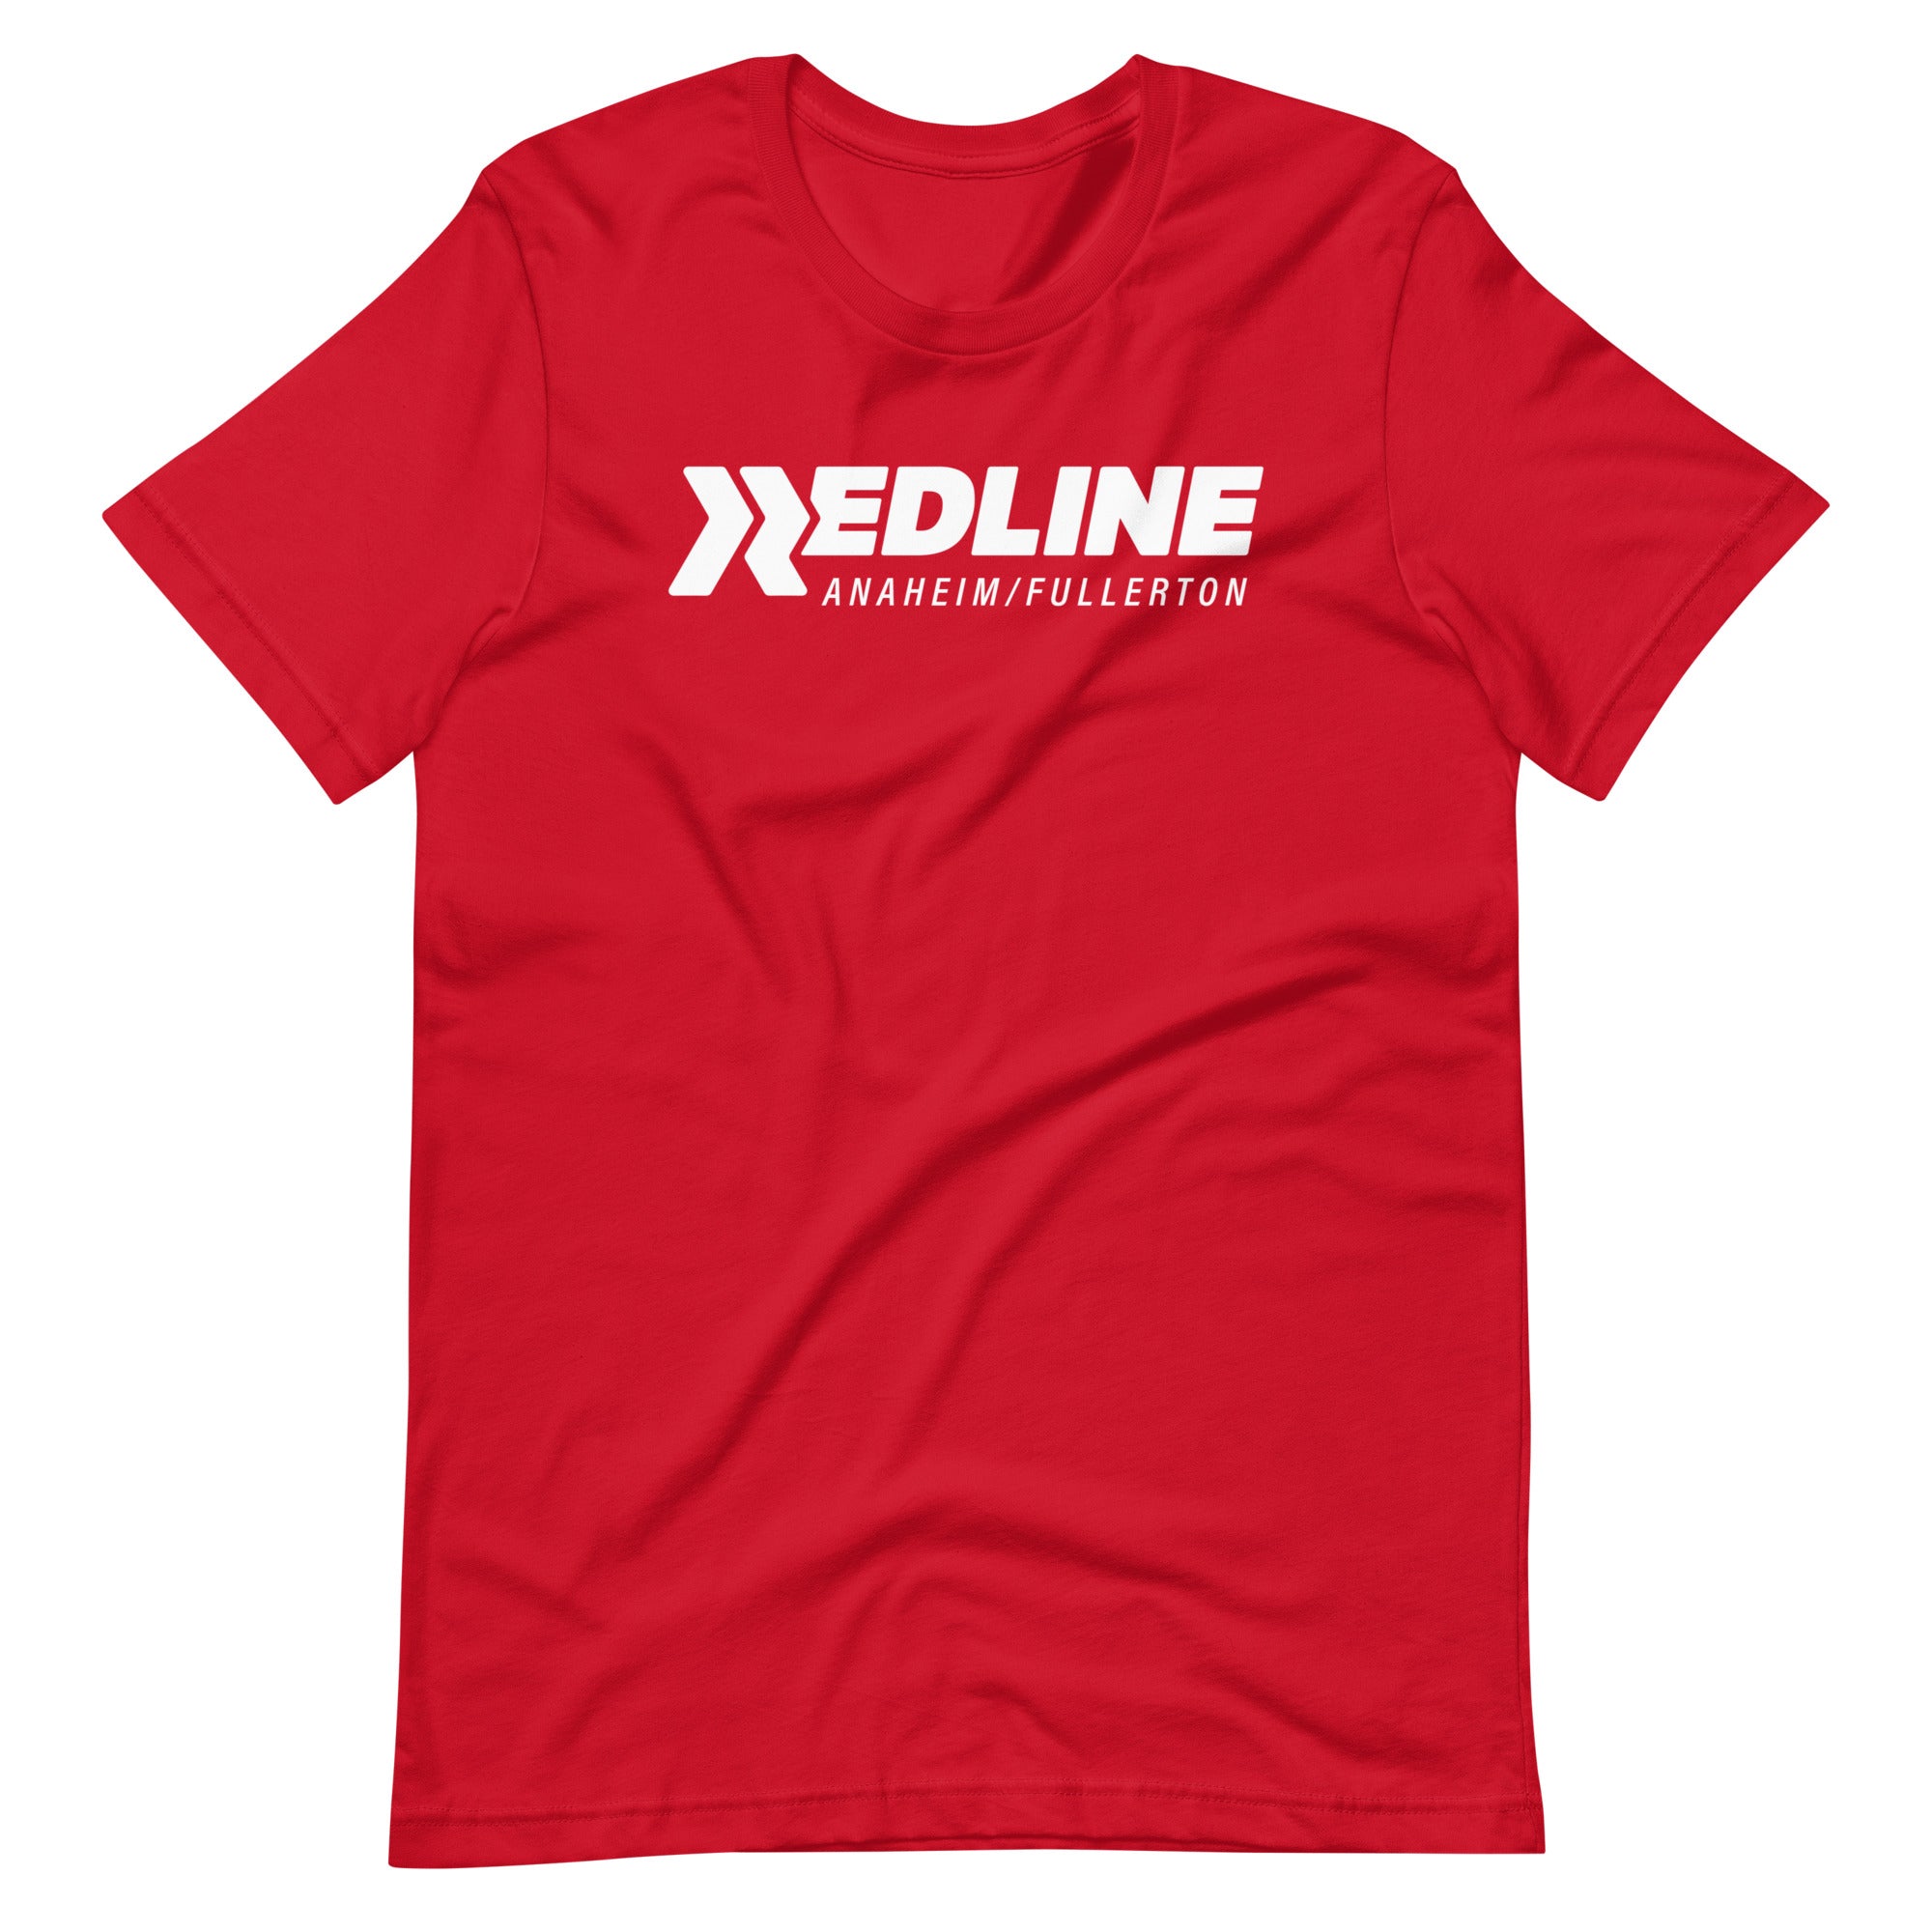 A/F White Logo - Red Unisex t-shirt